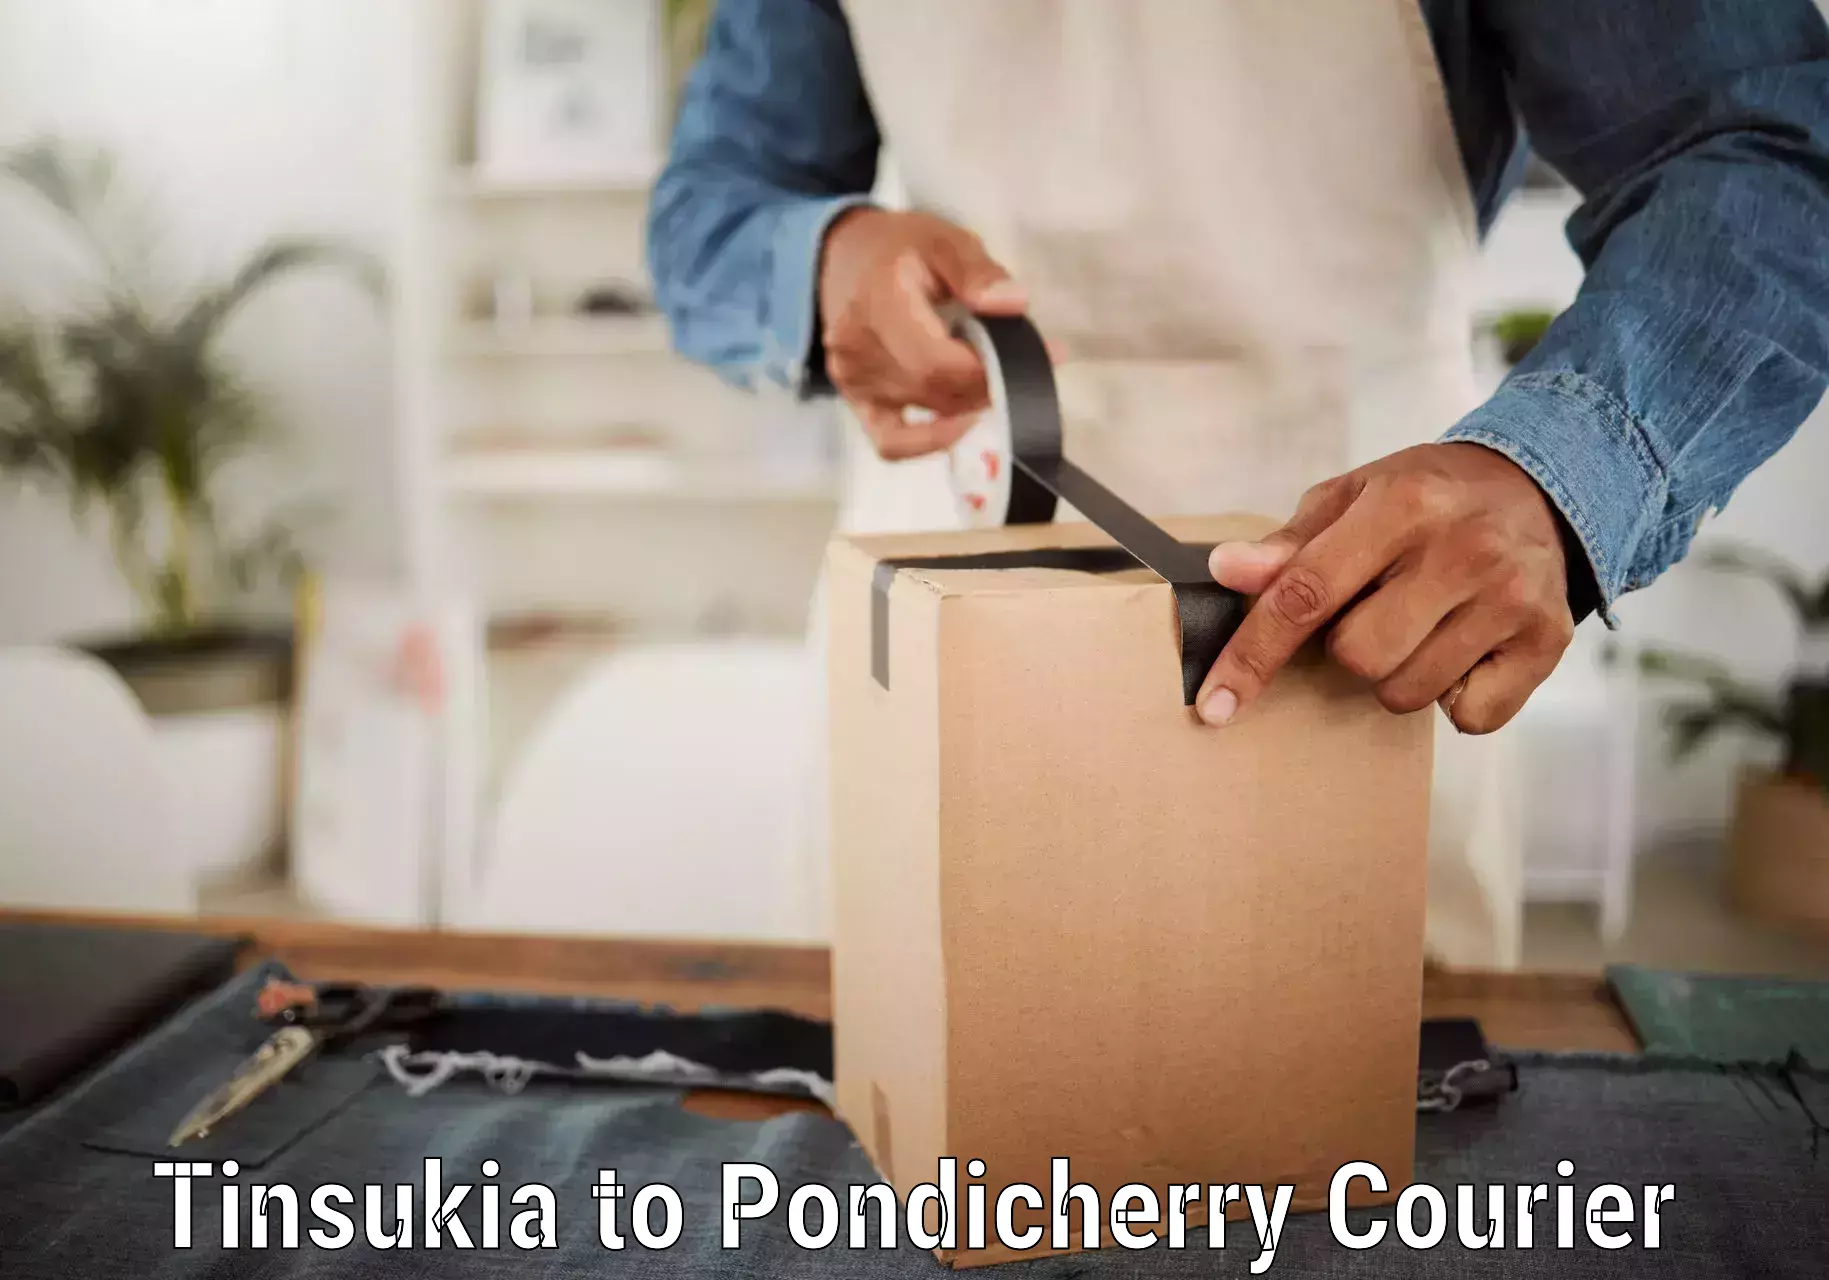 Speedy delivery service Tinsukia to Pondicherry